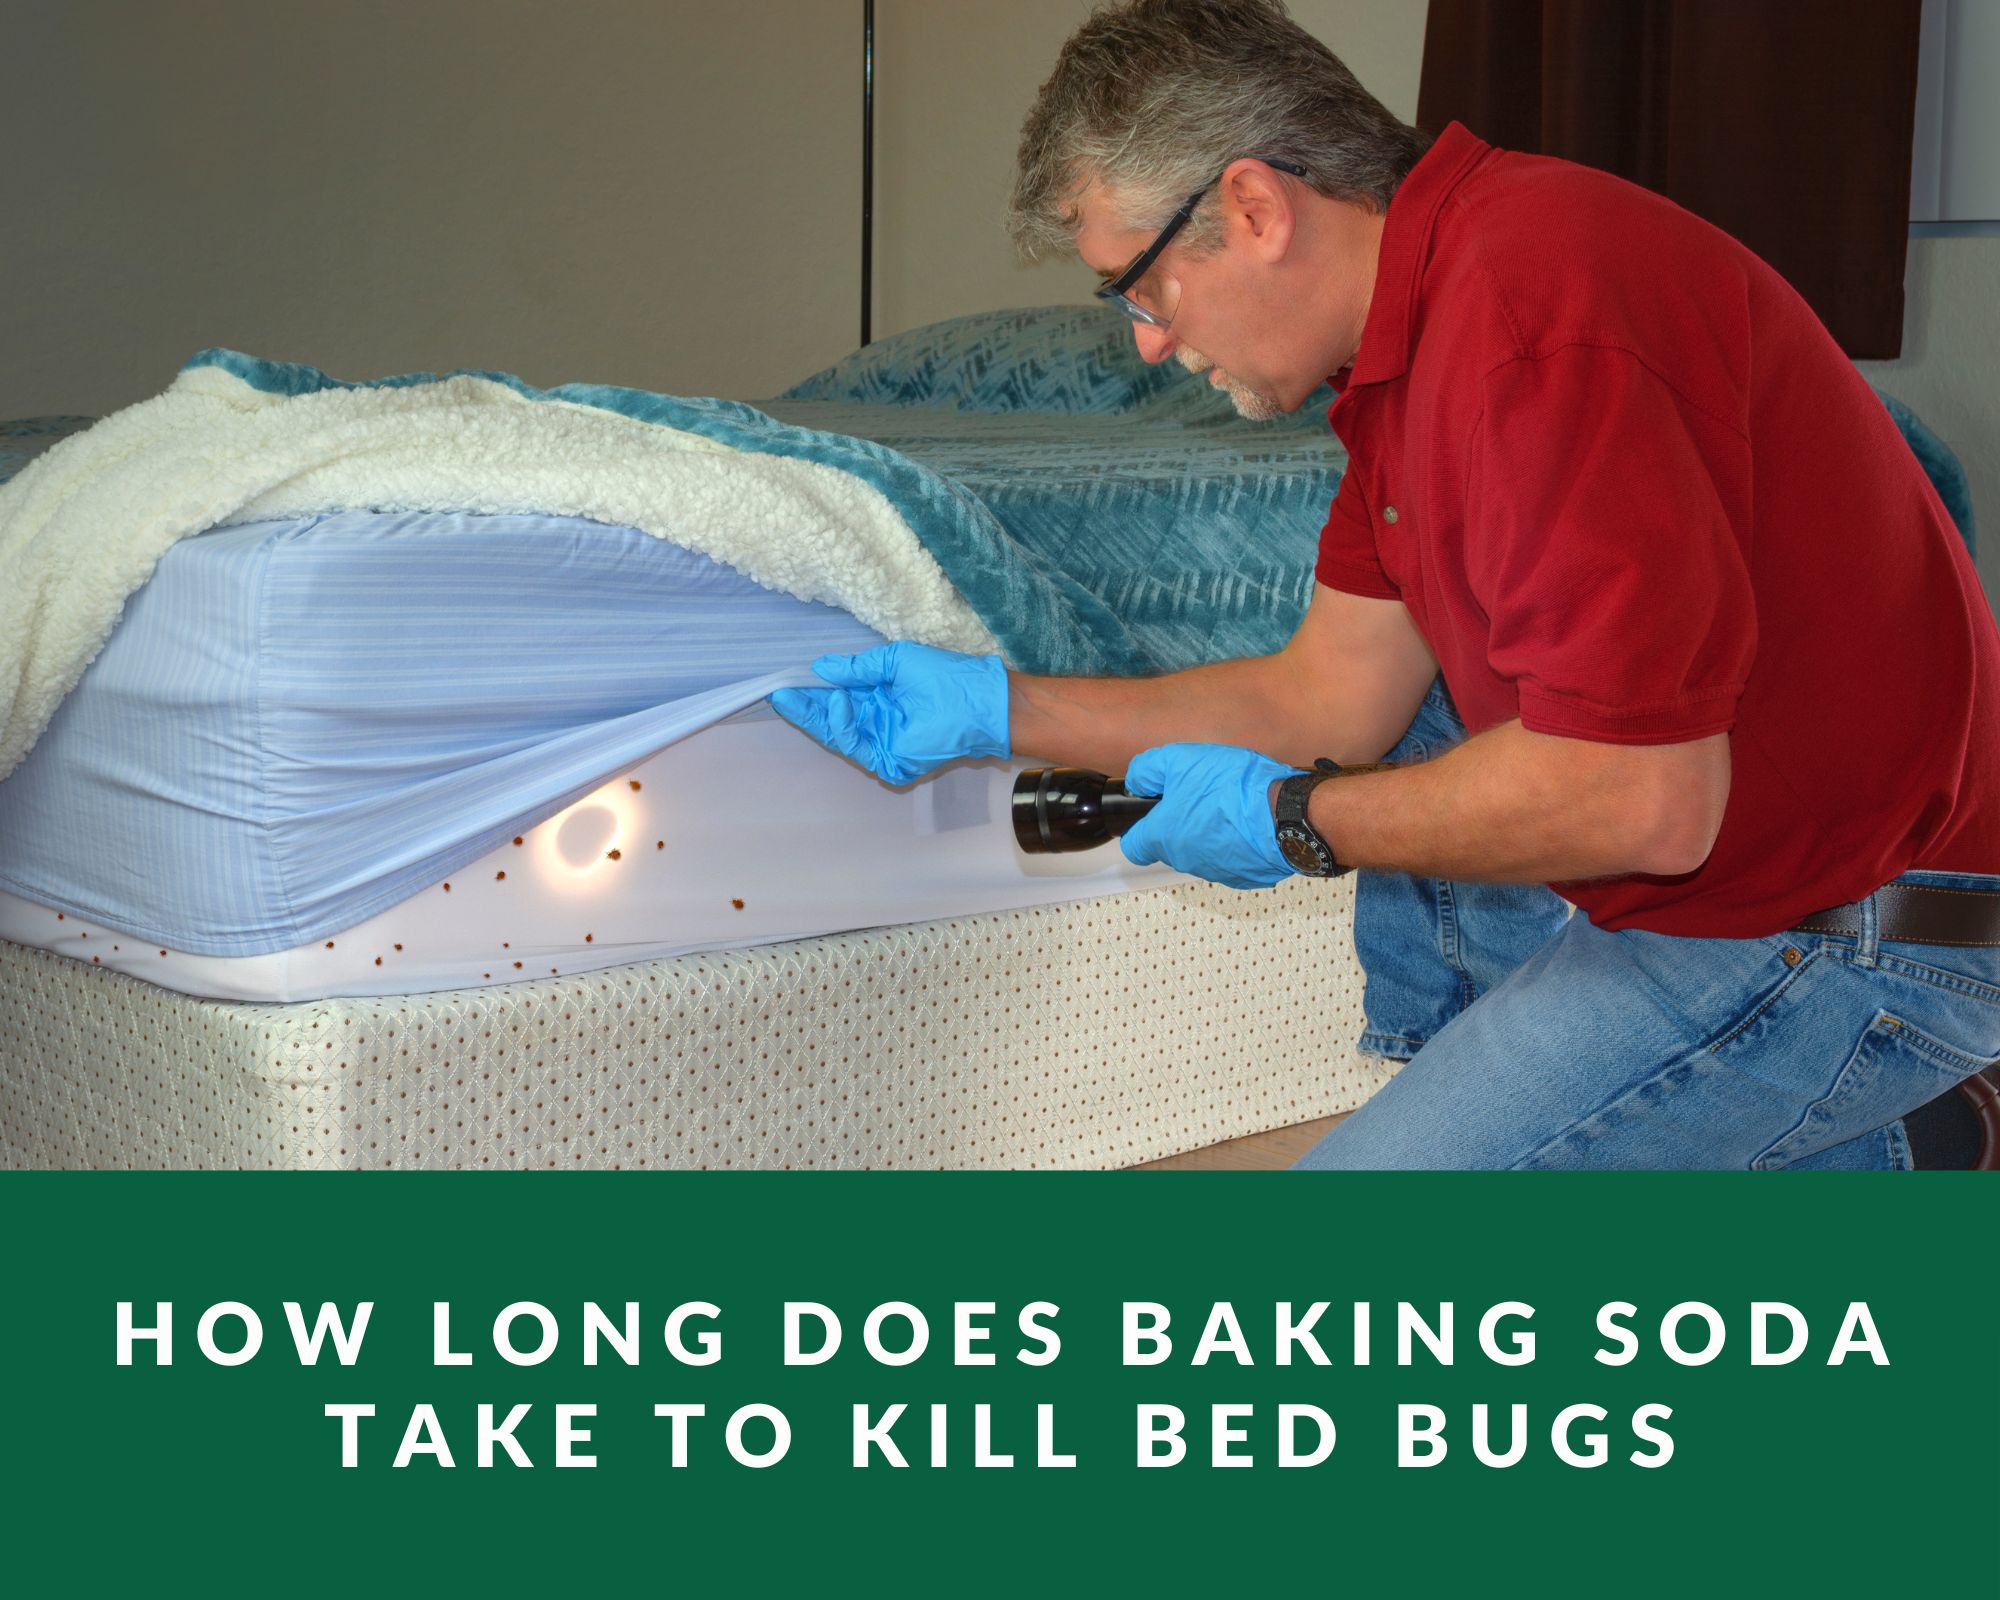 baking soda man inspecting bed bugs